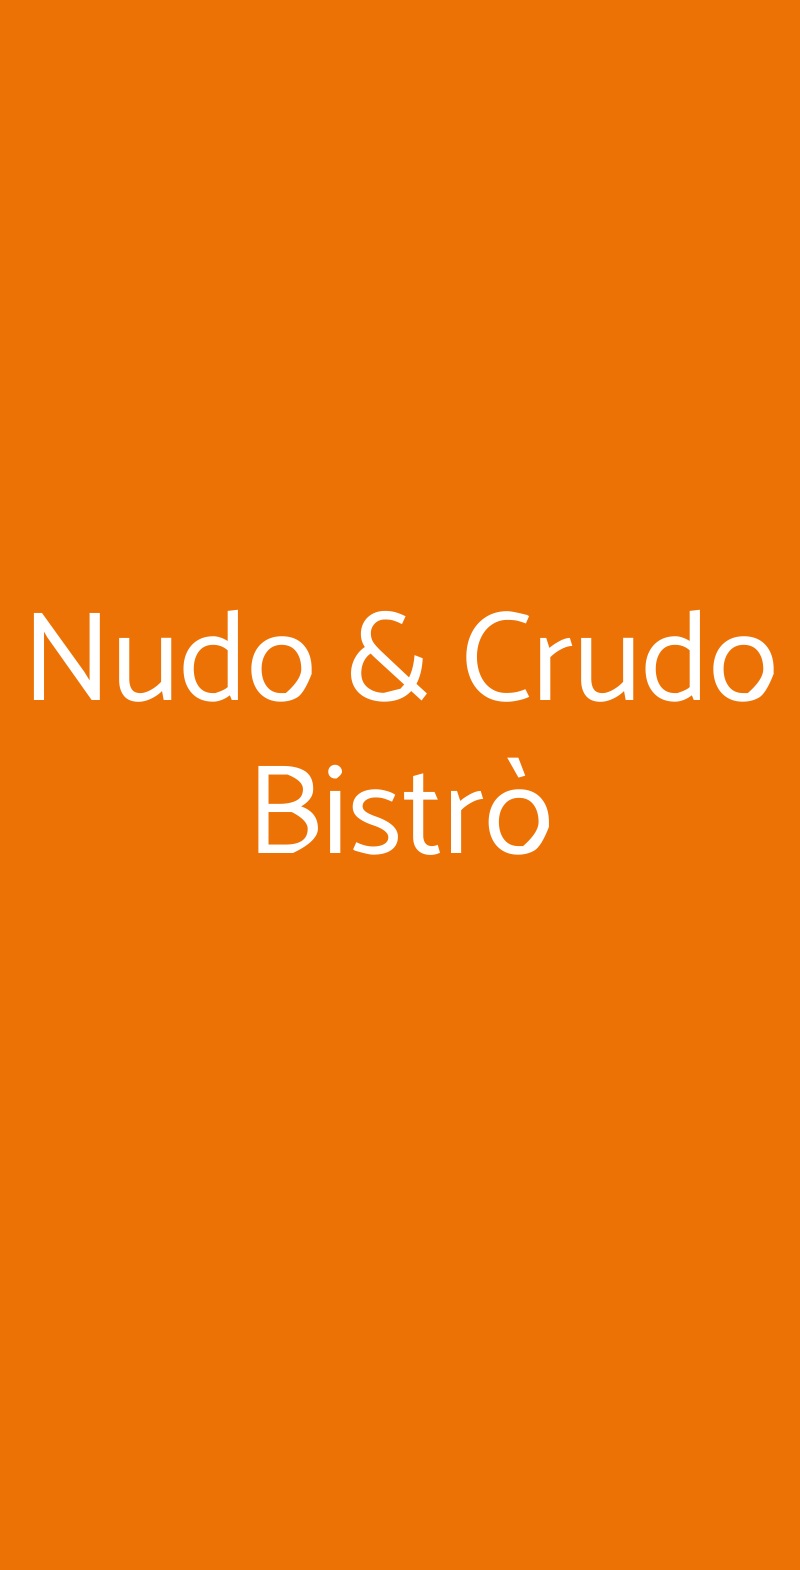 Nudo & Crudo Bistrò Milano menù 1 pagina